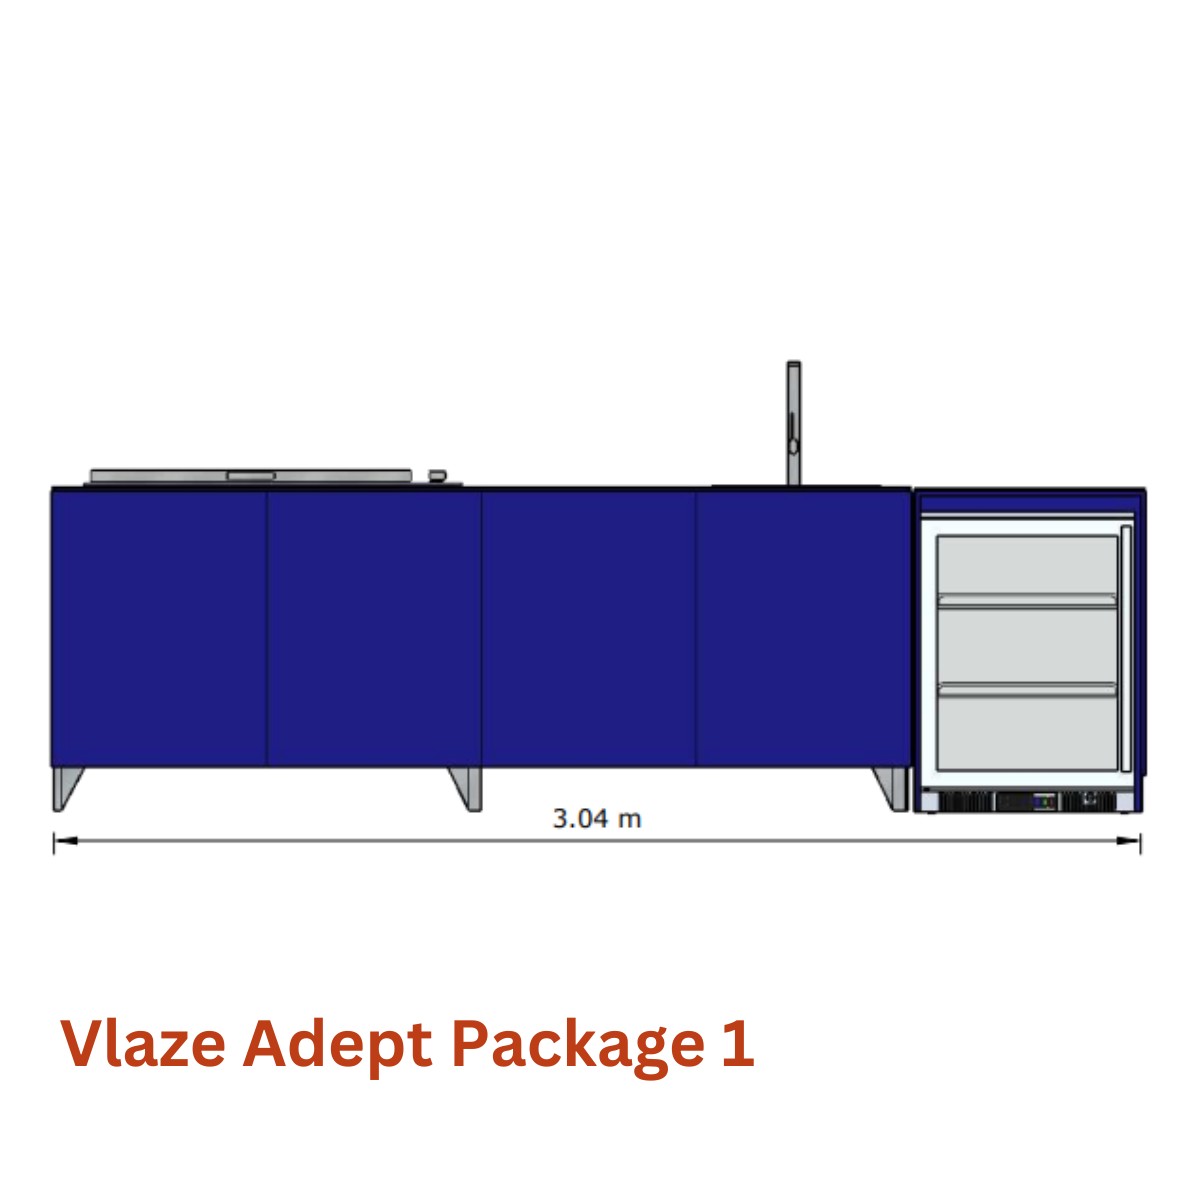 Vlaze Adept Package 1 - linear outdoor kitchen